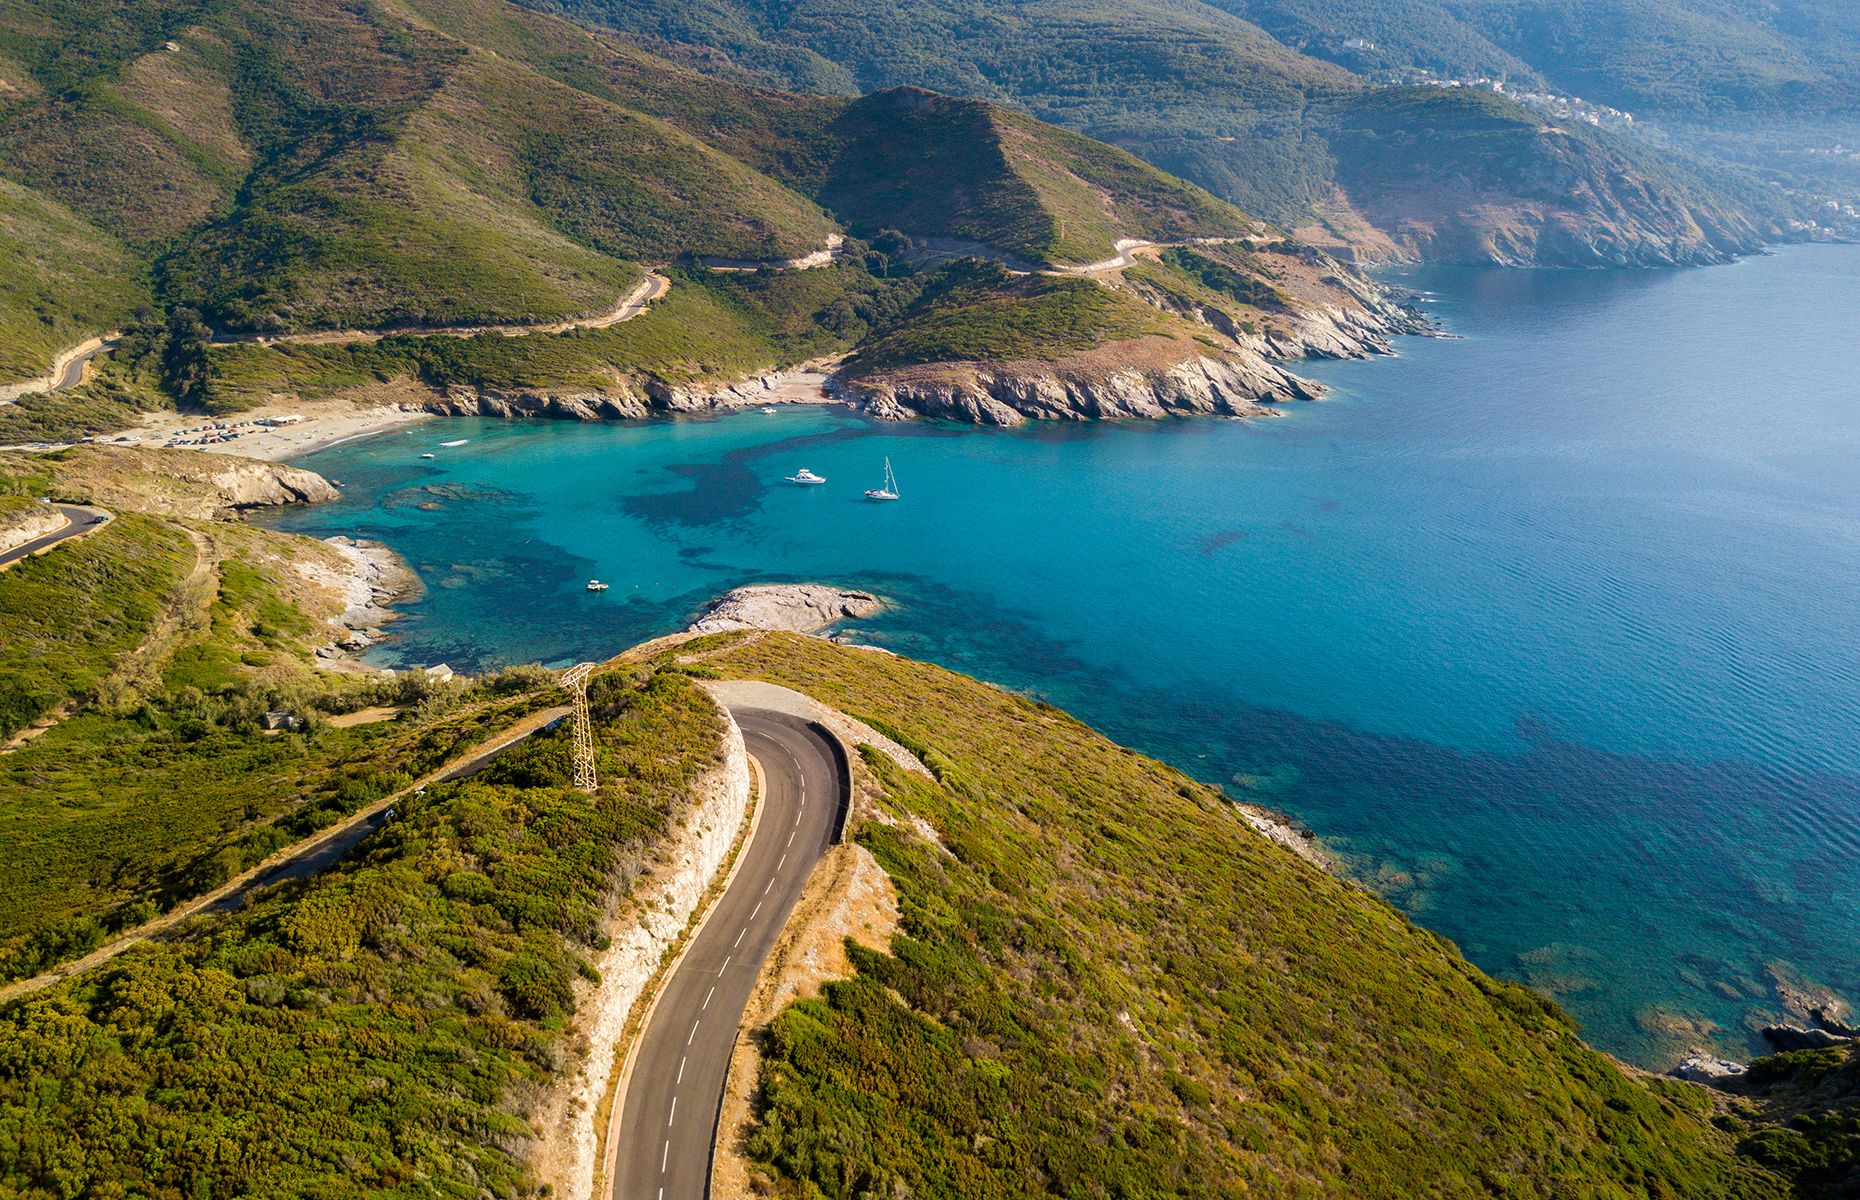 Corsican roads